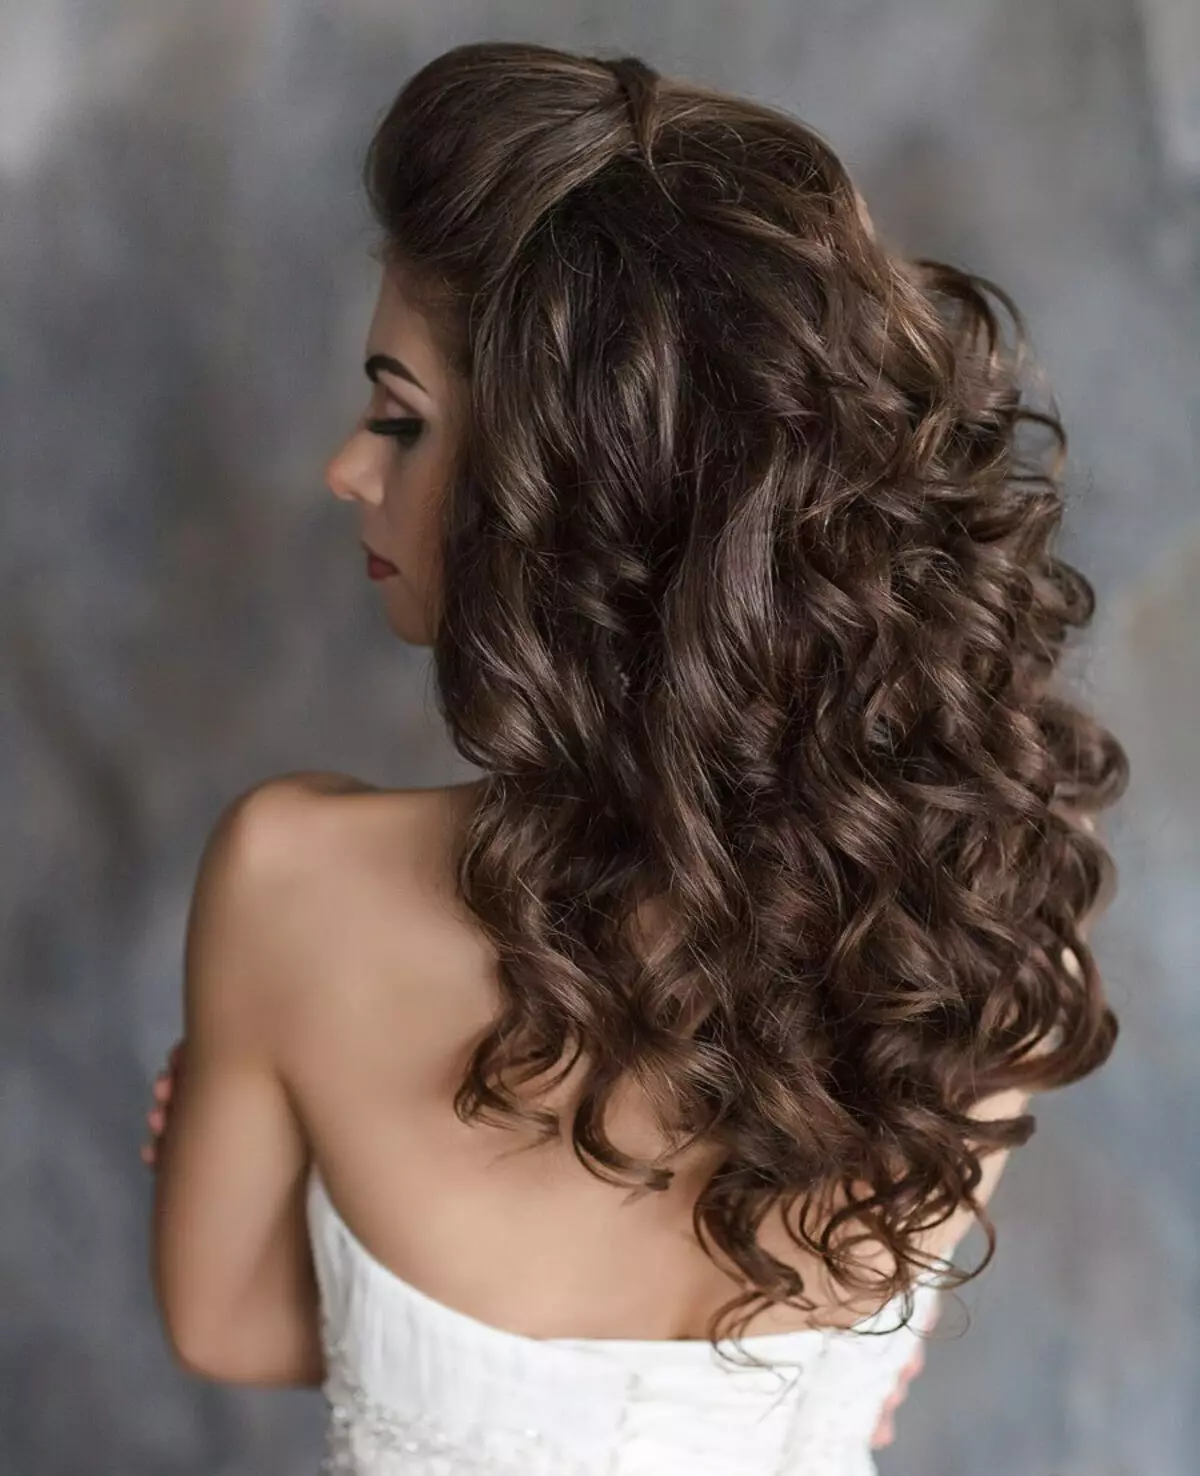 Curls لوہے بنانے کے لئے کس طرح؟ 56 تصویر کس طرح آپ کے بال کو curls میں ہوا اور سیدھا لوہے کا استعمال کرتے ہوئے ایک لہر میں ڈال دیا؟ 5059_10